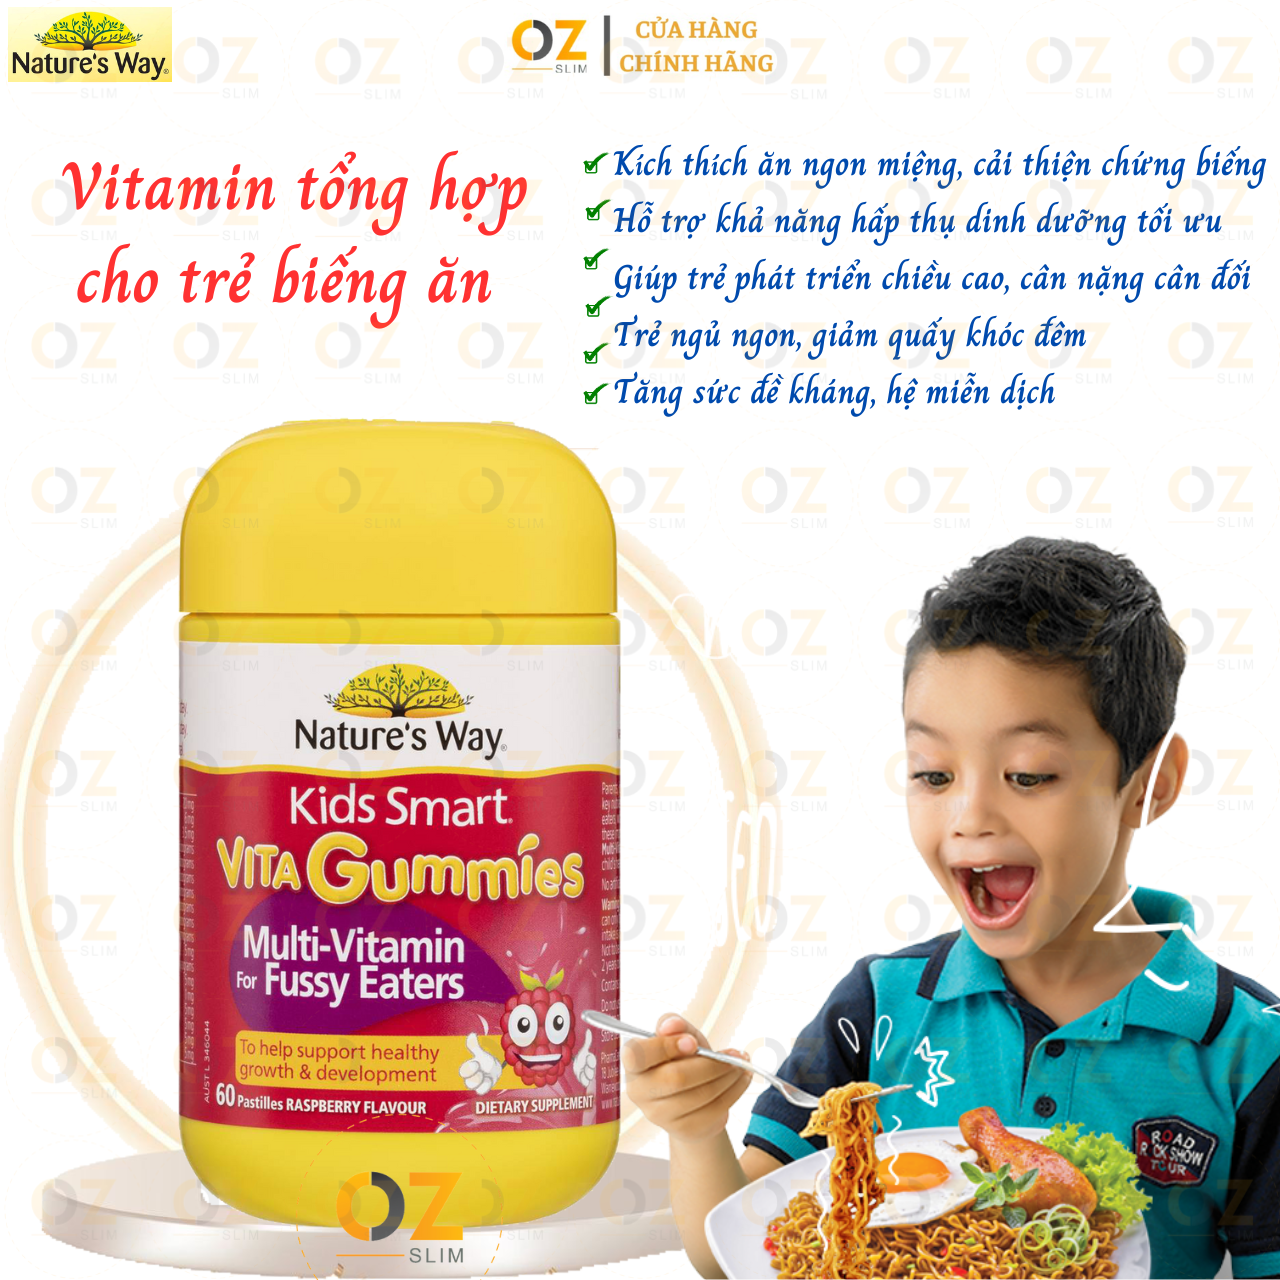 Vitamin tổng hợp cho trẻ biếng ăn Multi Vitamin for Fussy Eaters Nature's Way